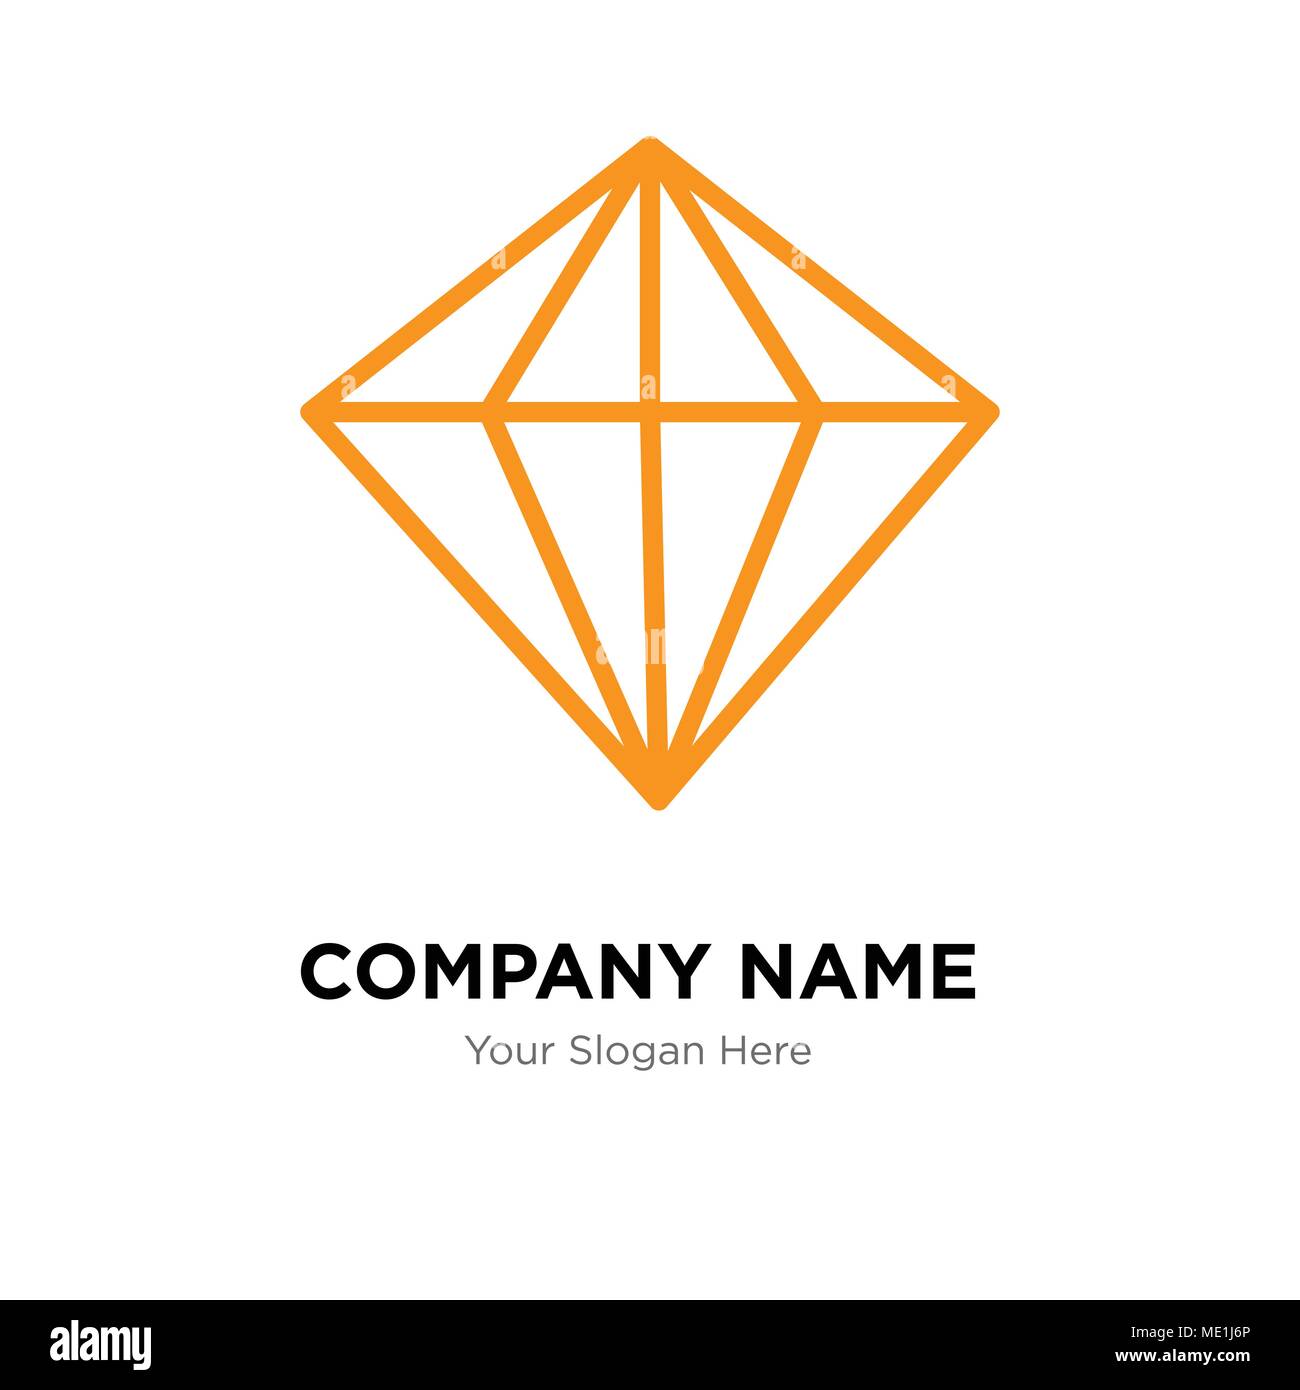 Diamond company logo design template, Business corporate vector icon Stock Vector